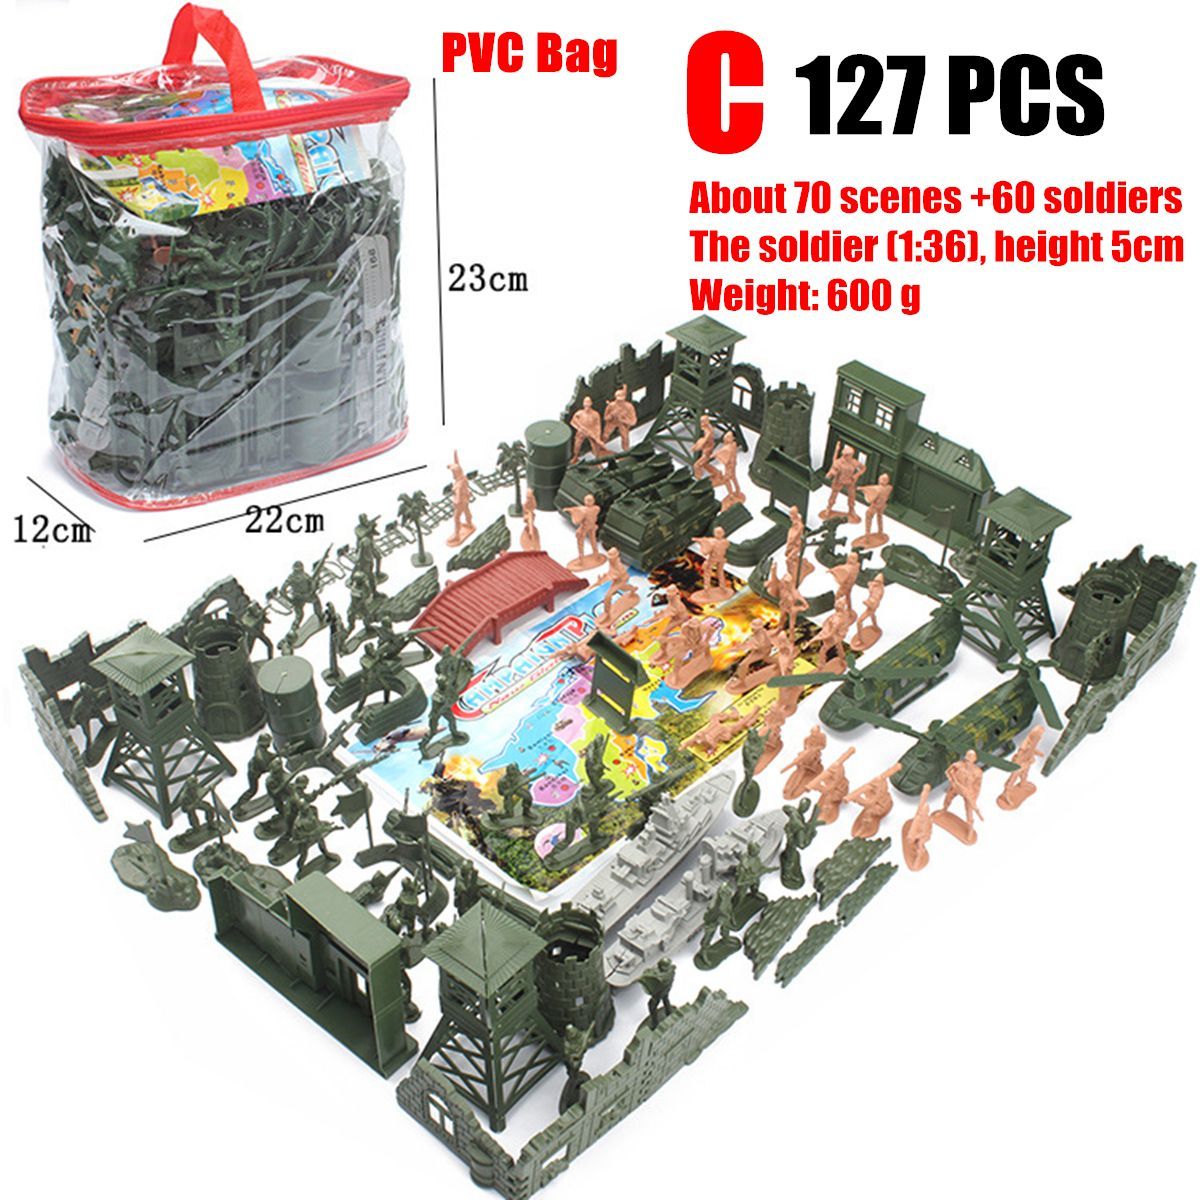 97114127PCS-Soldier-Army-Grenade-Tank-Aircraft-Rocket-Sand-Scene-Kid-Model-Toys-1699821